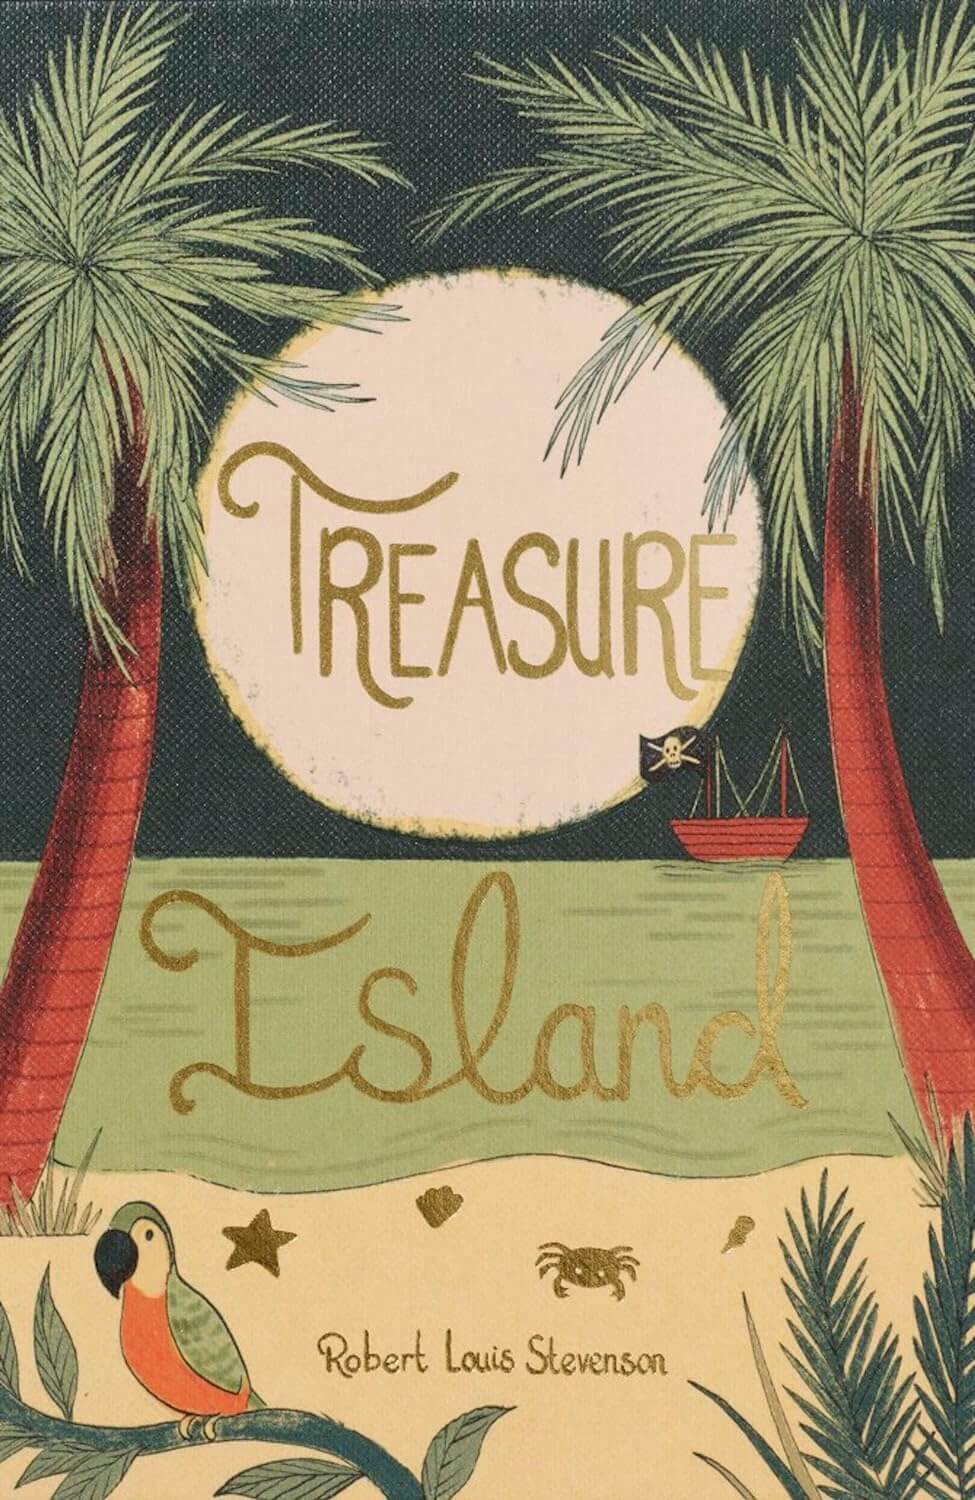 “Treasure Island” by Robert Louis Stevenson (1883)